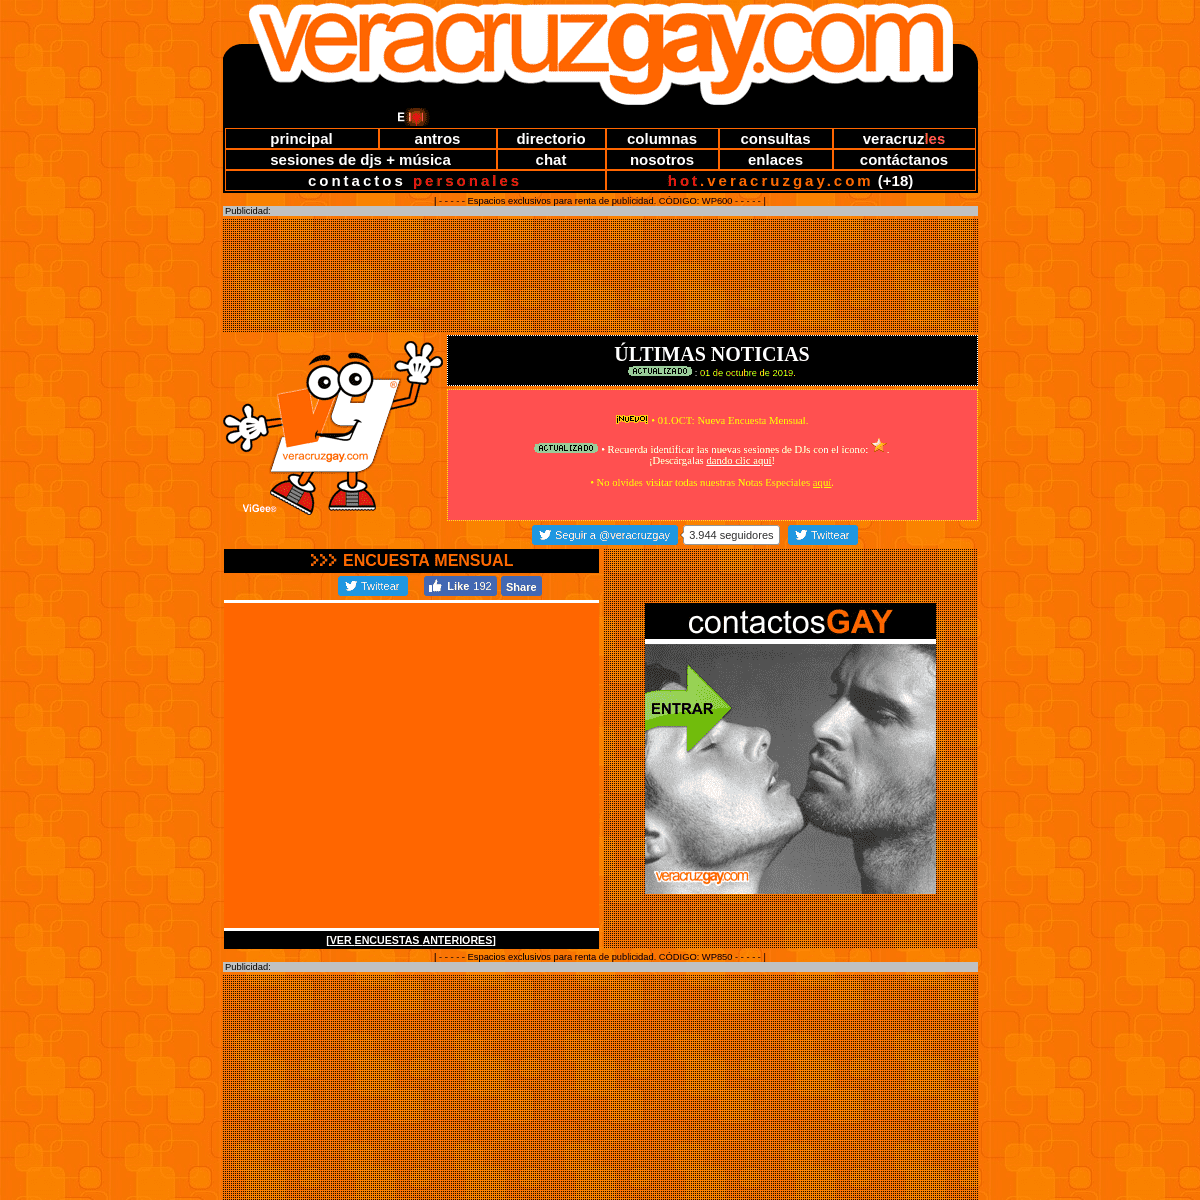 A complete backup of veracruzgay.com